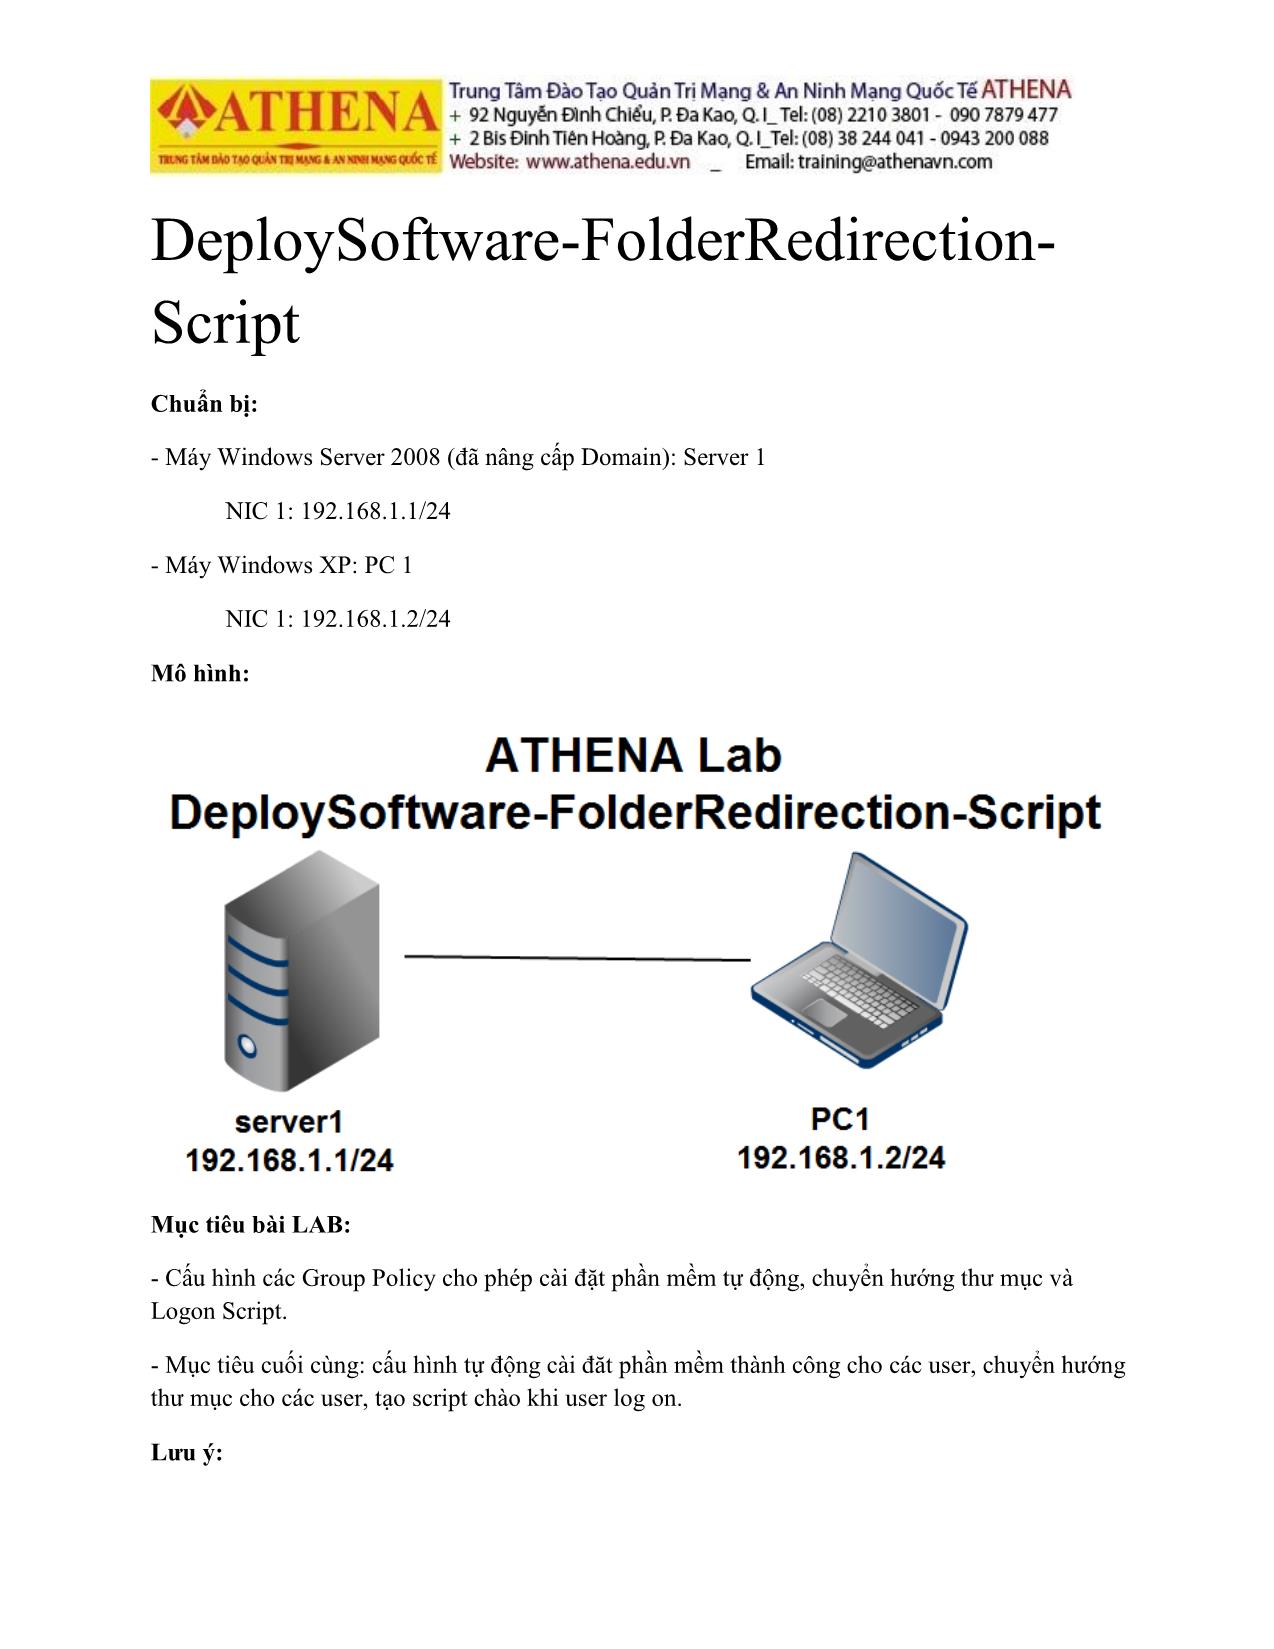 Tài liệu DeploySoftware - FolderRedirectionScript trang 1